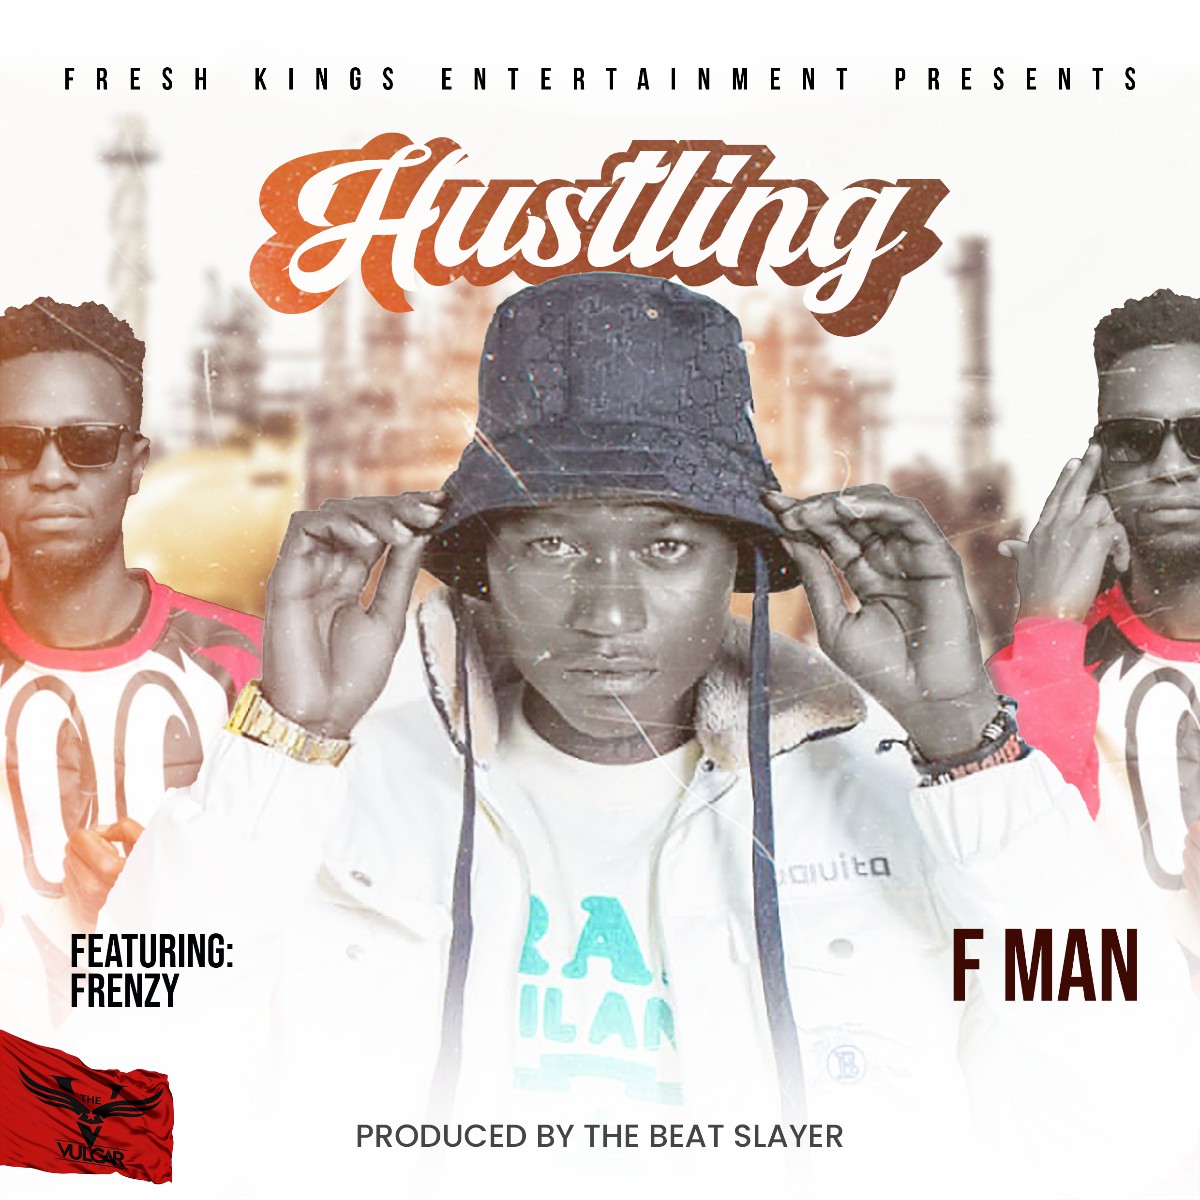 F Man ft. Frenzy - Hustling